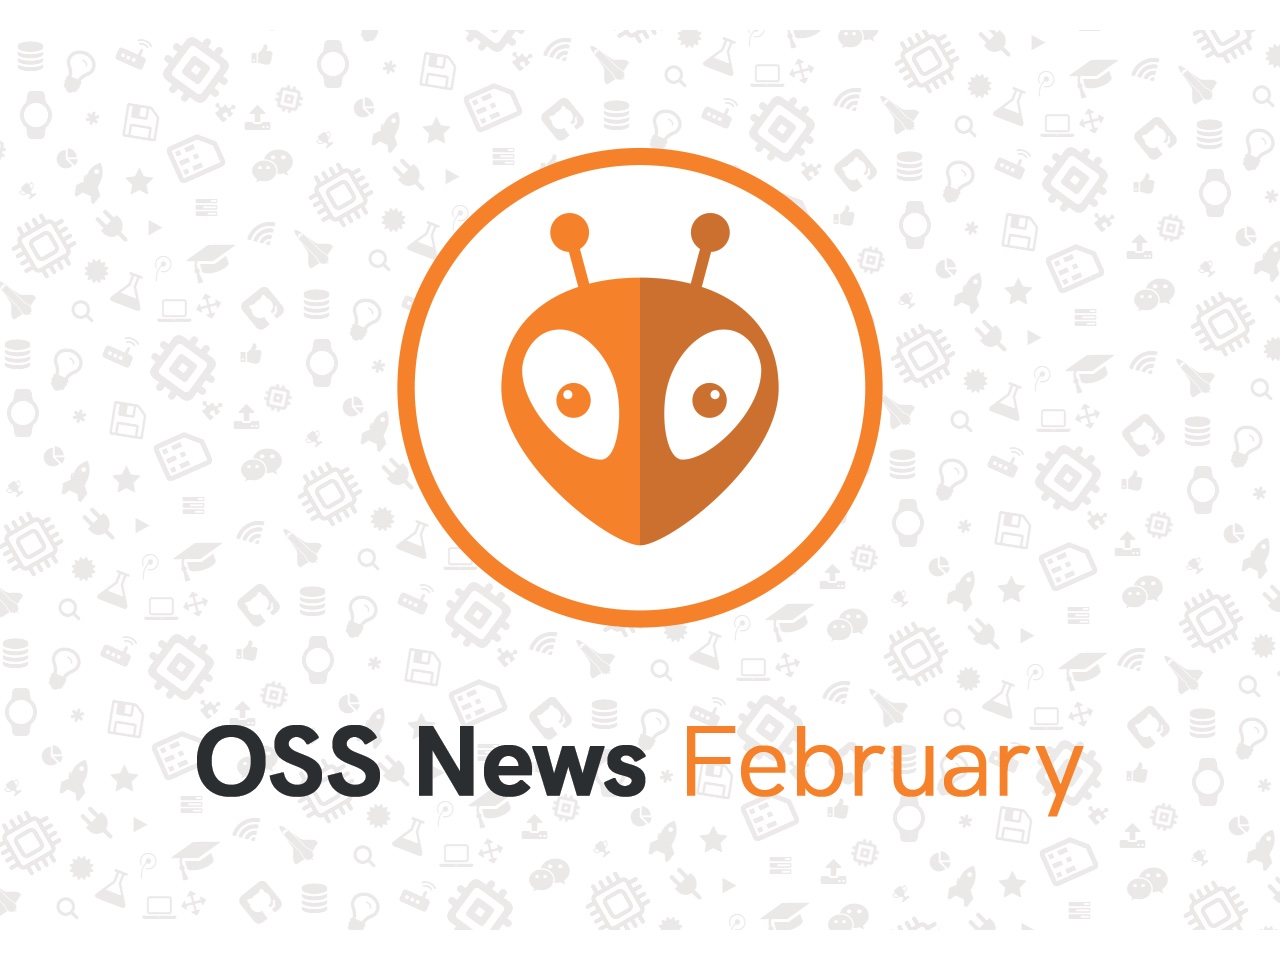 PlatformIO Open Source February Updates